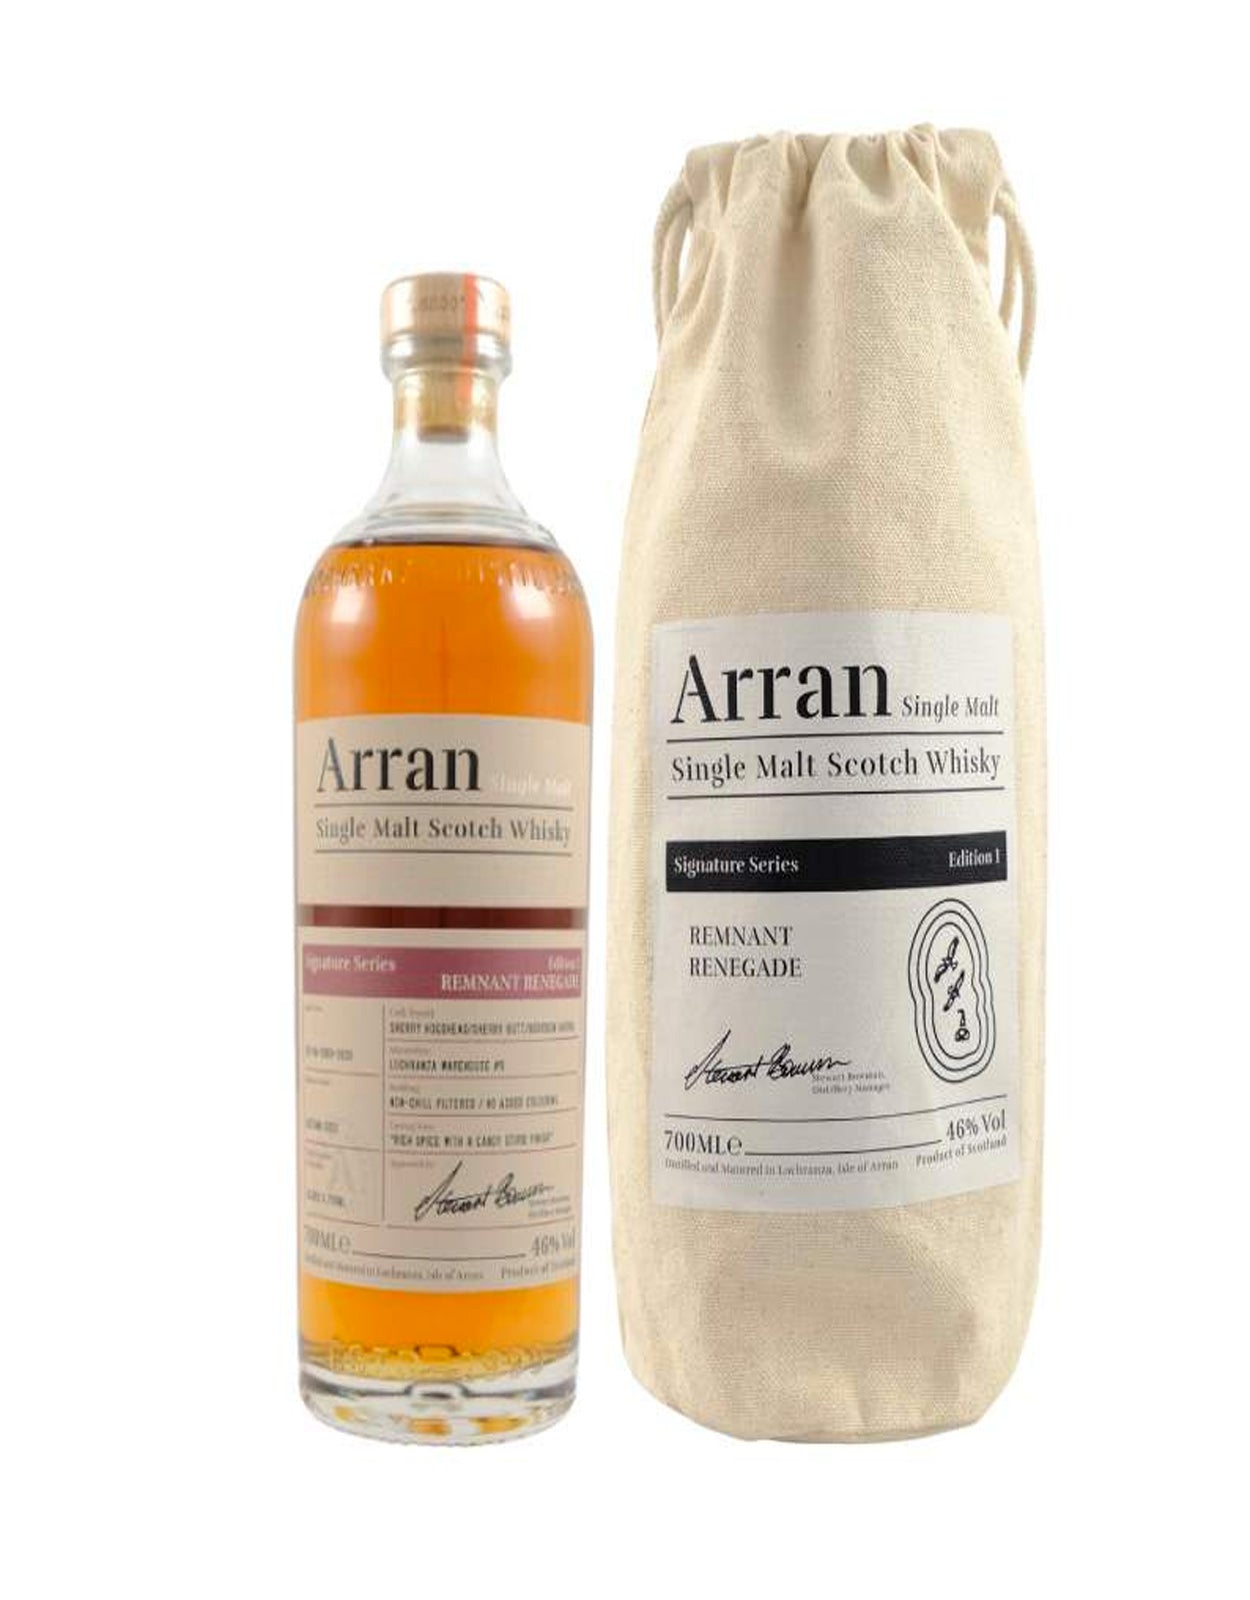 Arran Signature Series Edition 1 "Remnant Renegade" Single Malt Whisky